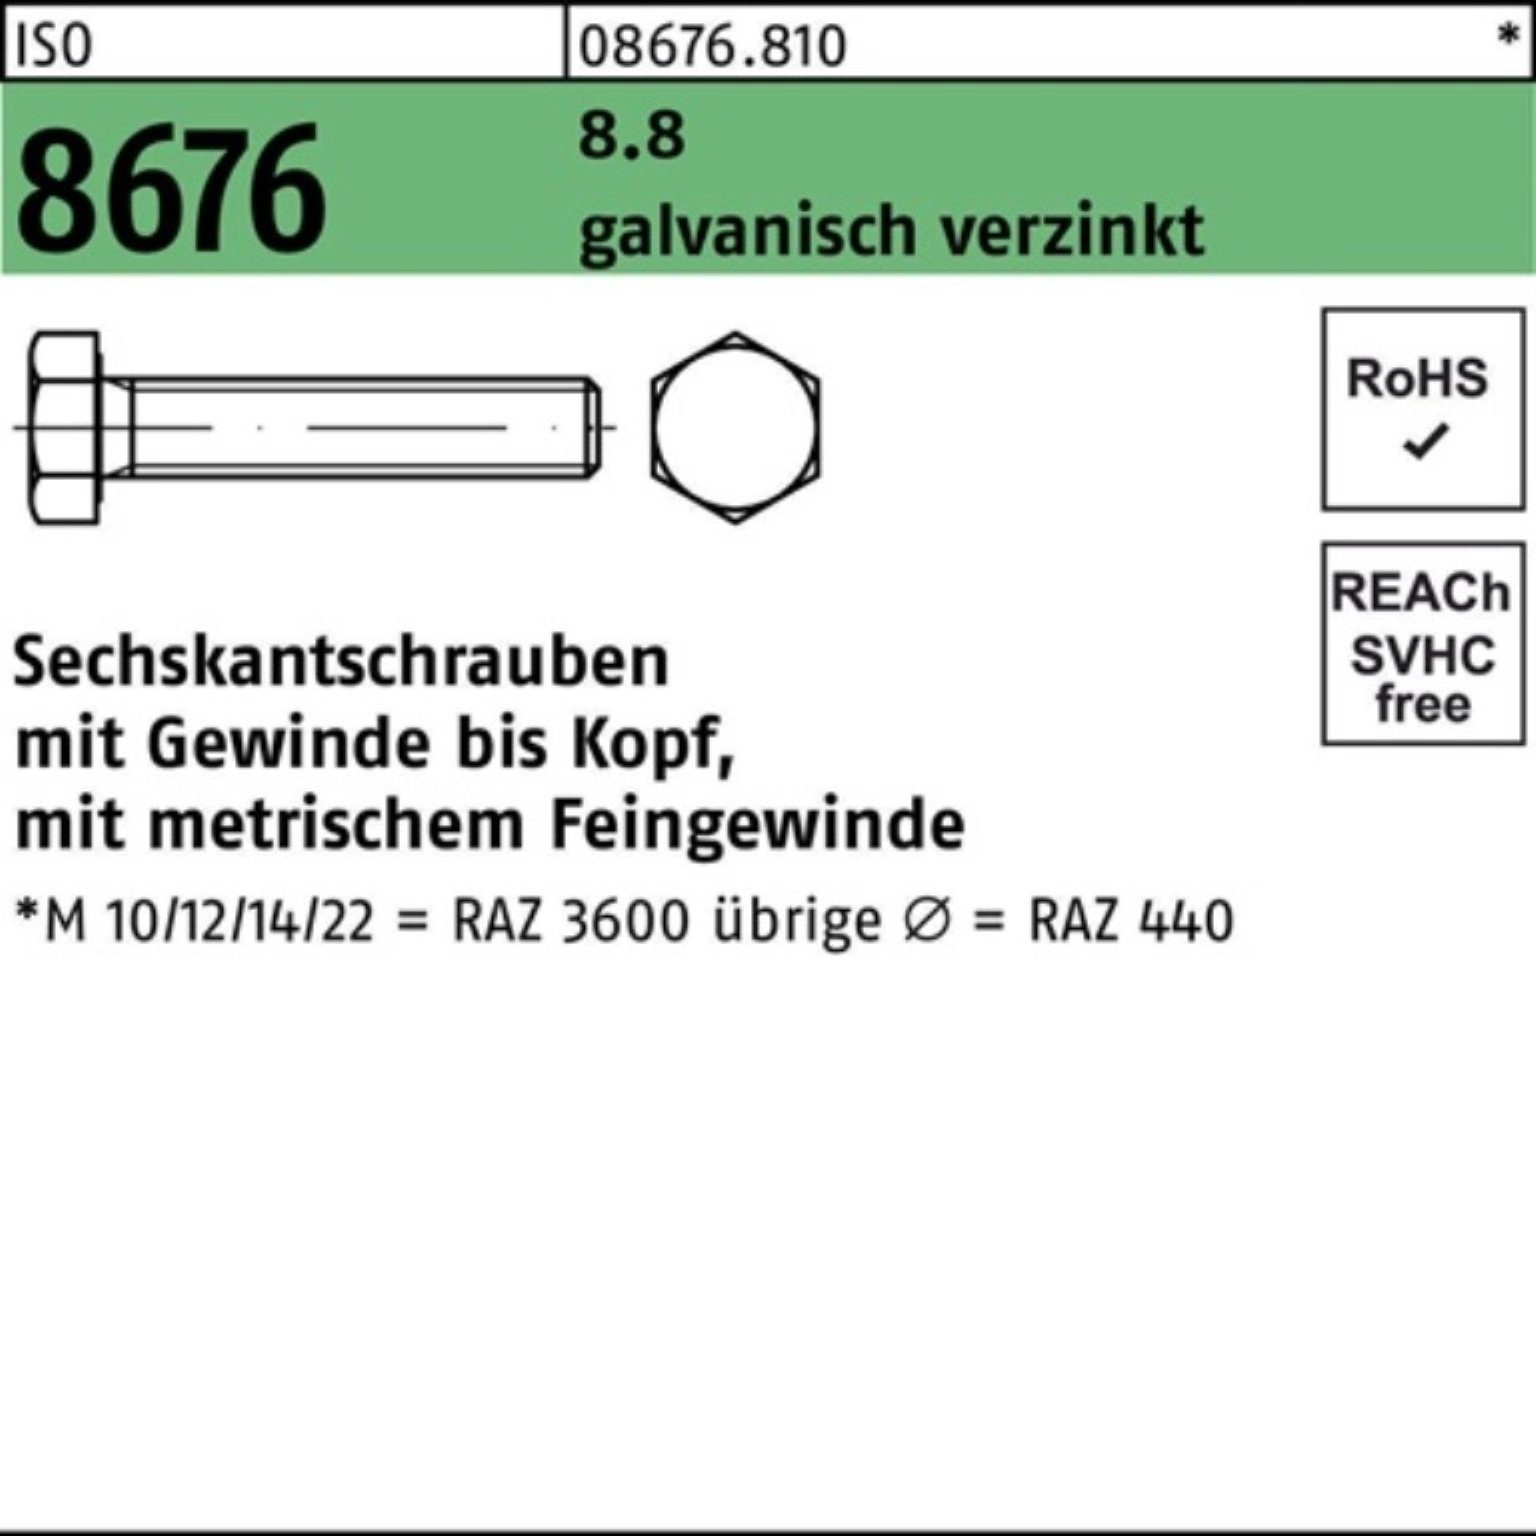 Sechskantschraube Sechskantschraube 8676 Reyher M14x1,5x100 ISO Pack 8.8 50 galv.verz. VG 100er